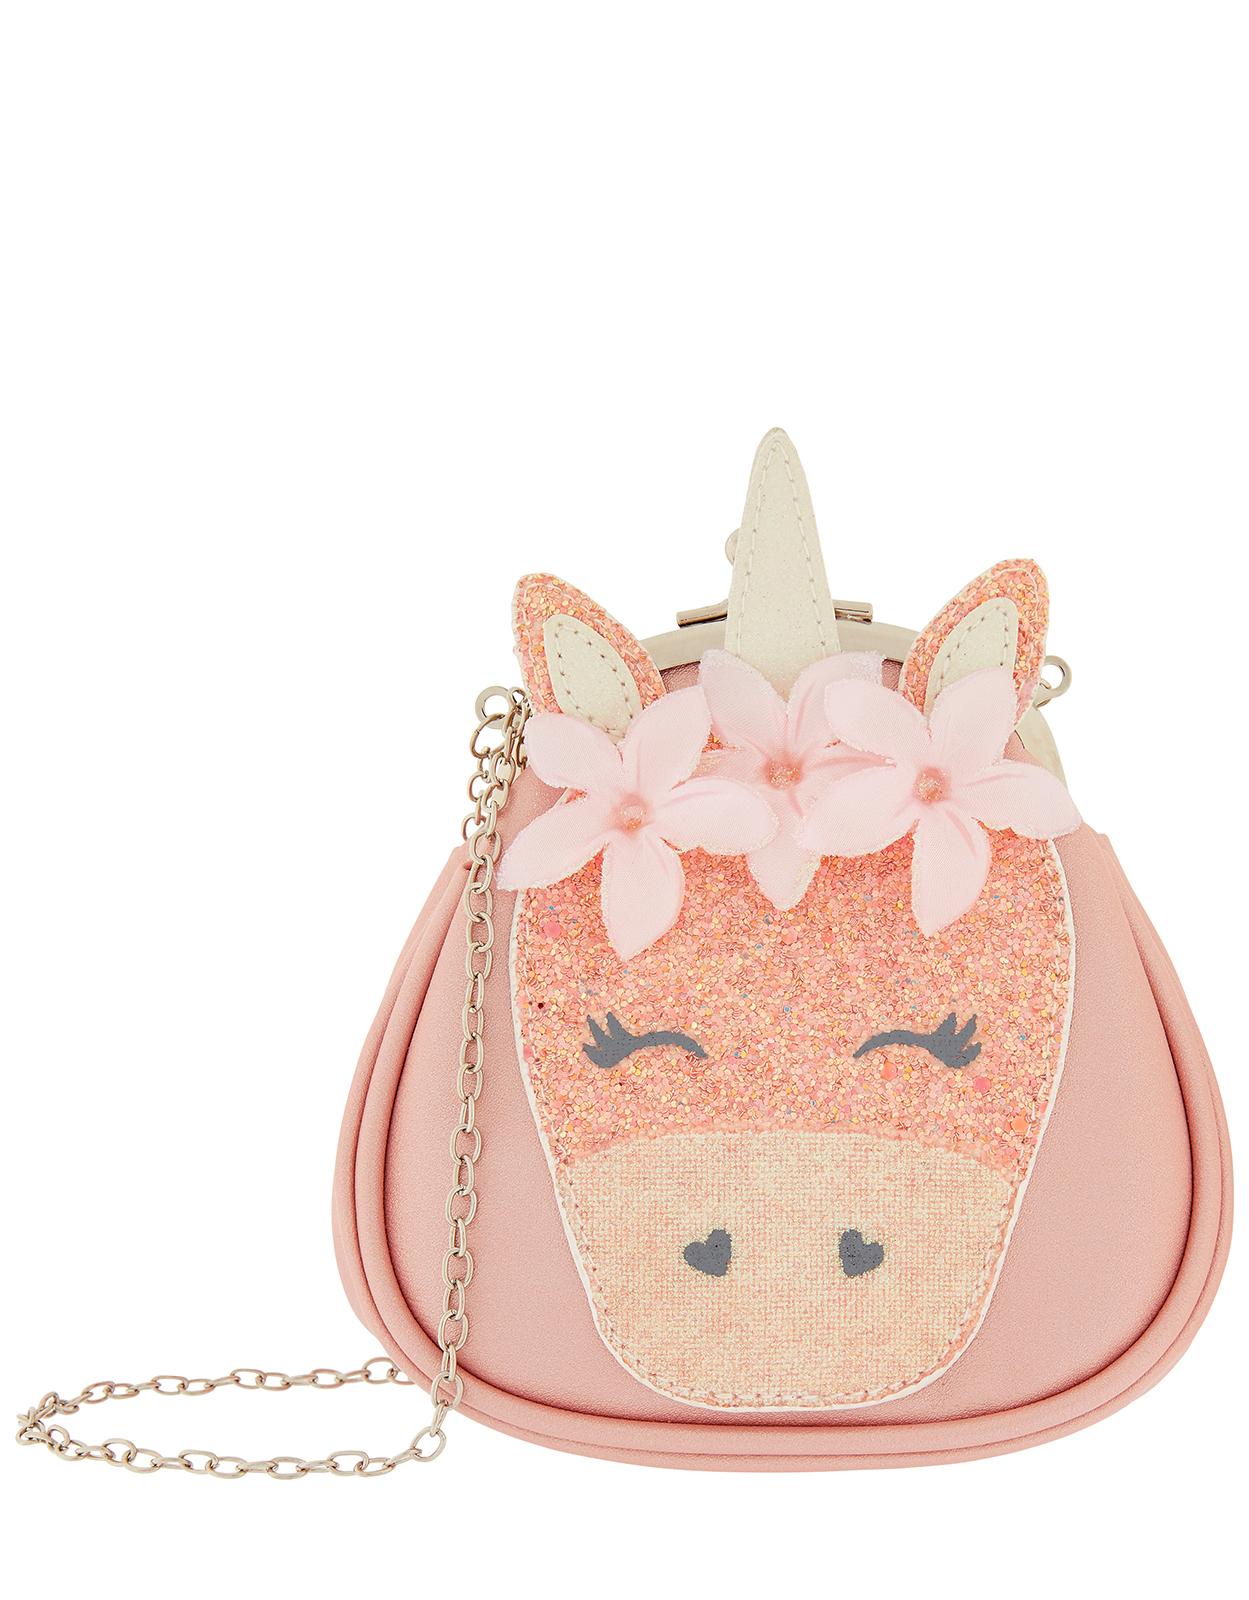 Monsoon Starflower Unicorn Bag in Pink - Lyst